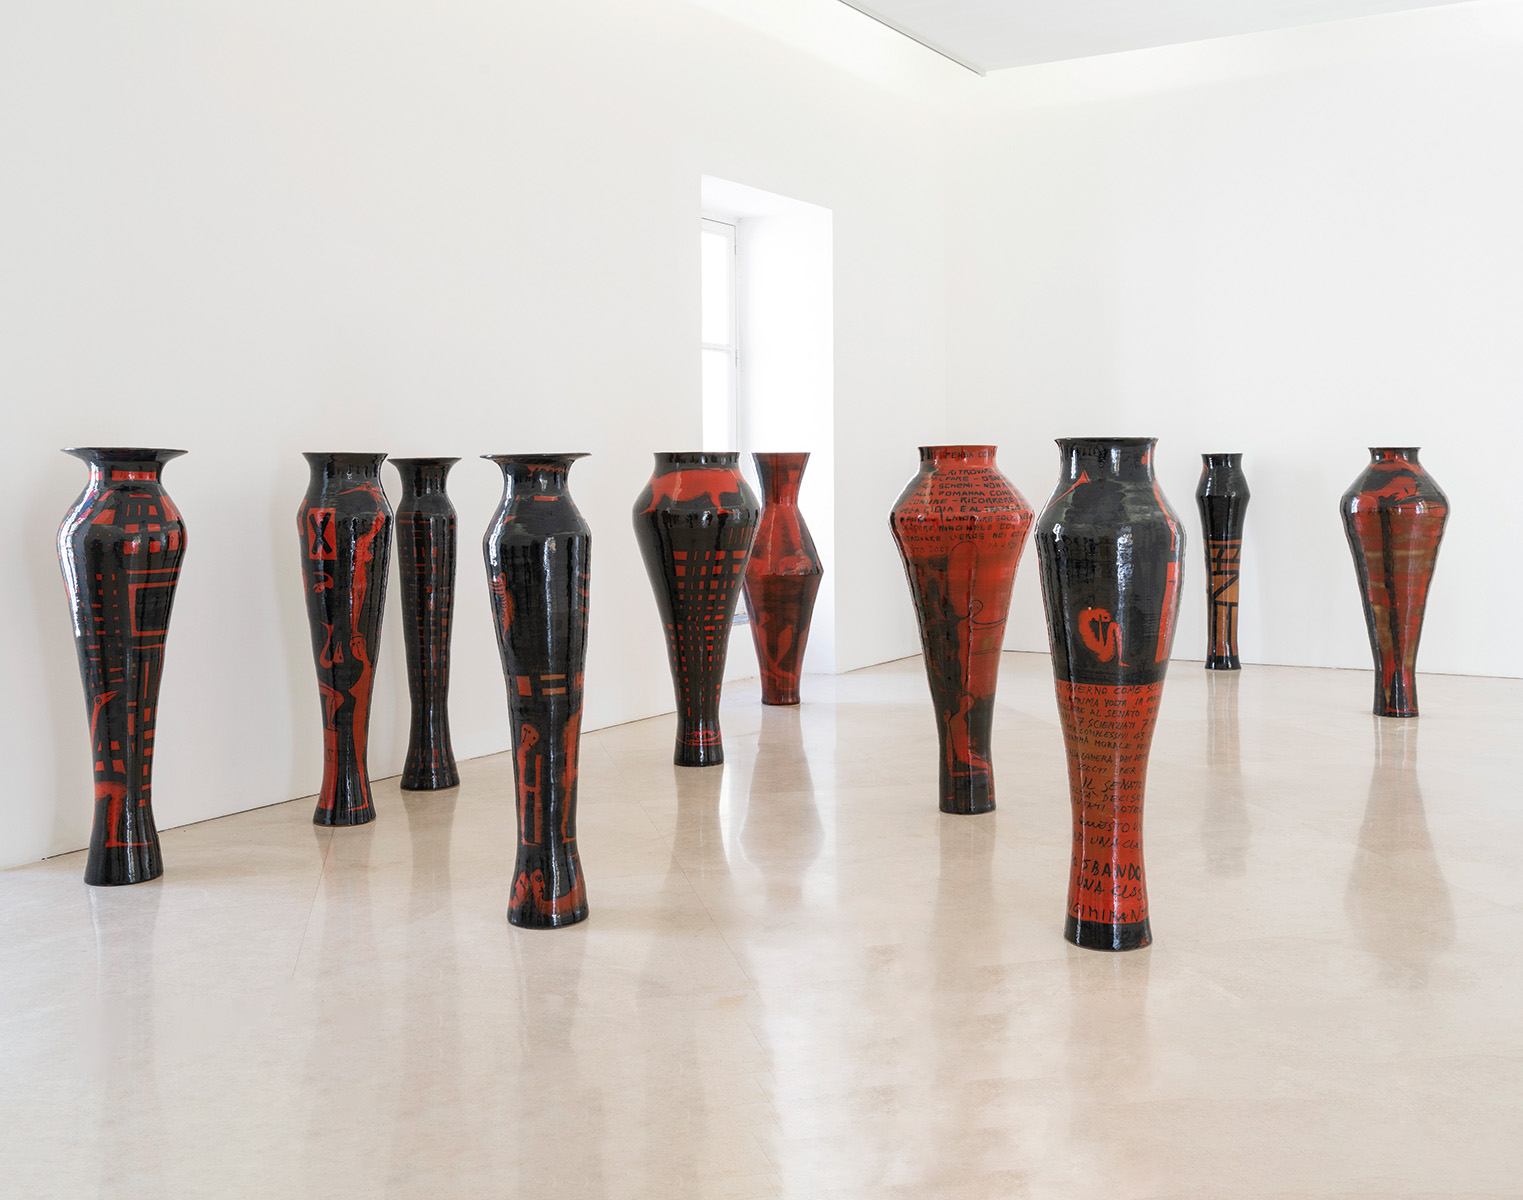 Ugo Marano, Vasi, 2001-2002, ceramica smaltata, misure varie, Collezione Eredi Marano